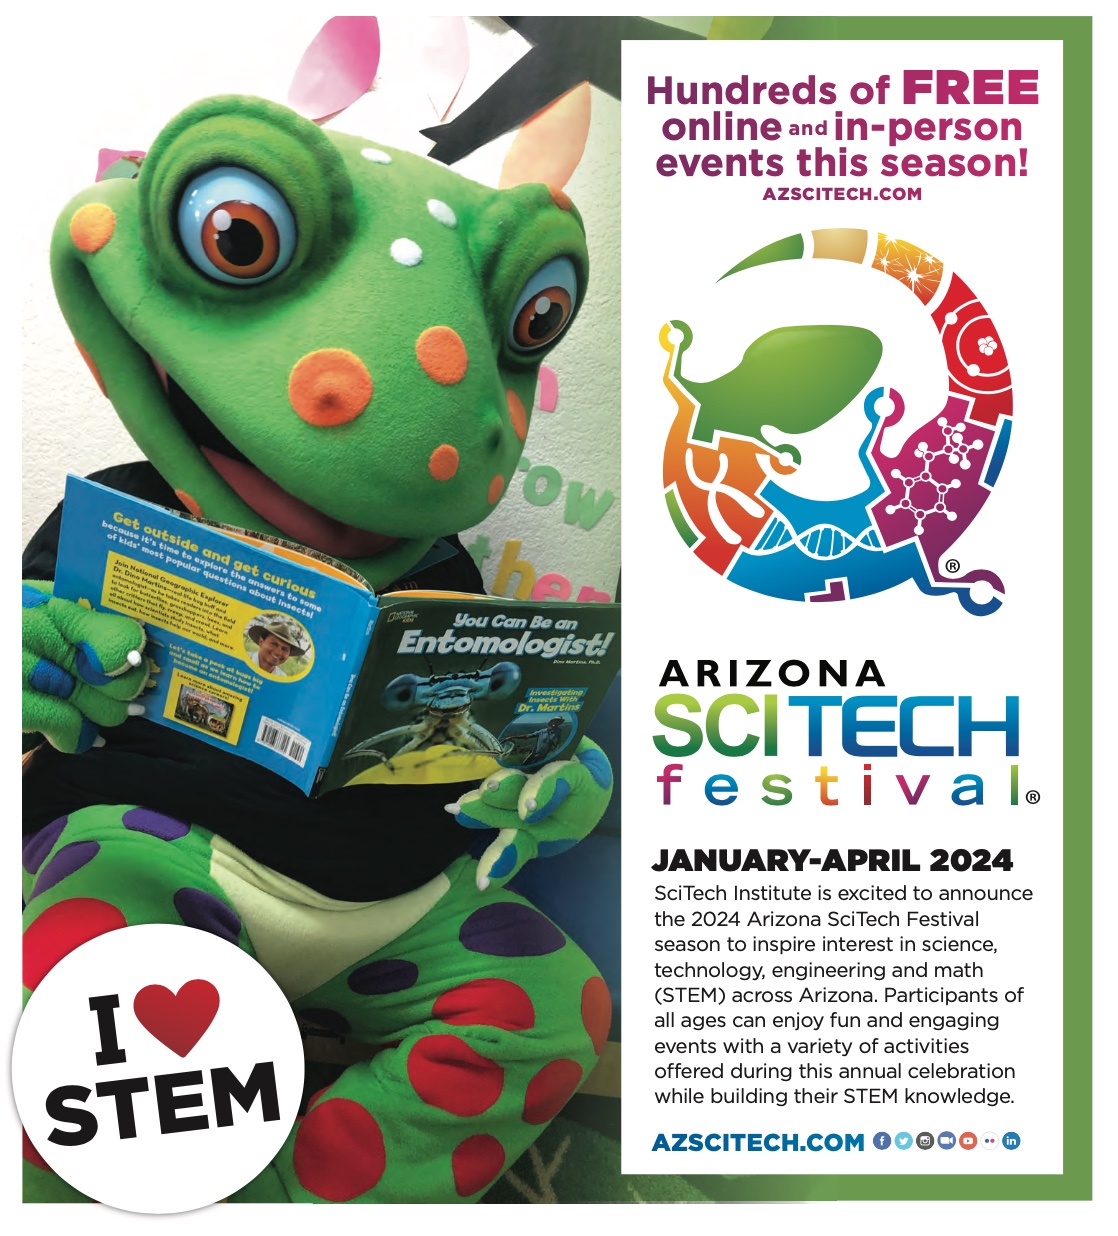 Arizona SciTech Festival: january - April 2024